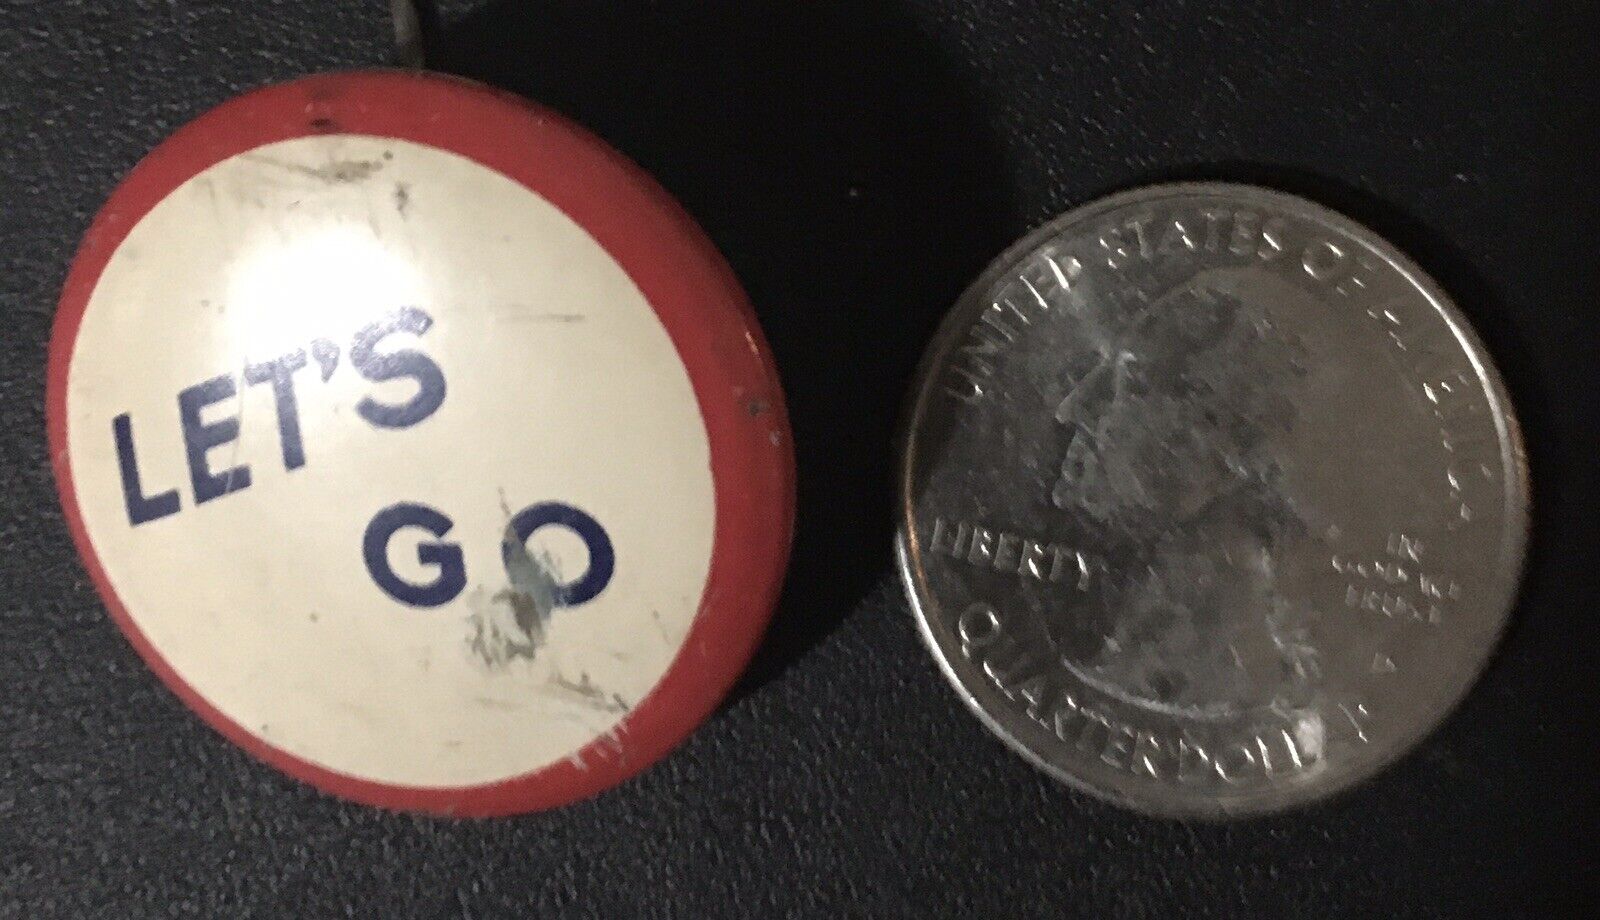 Vintage Let’s Go Pin Button